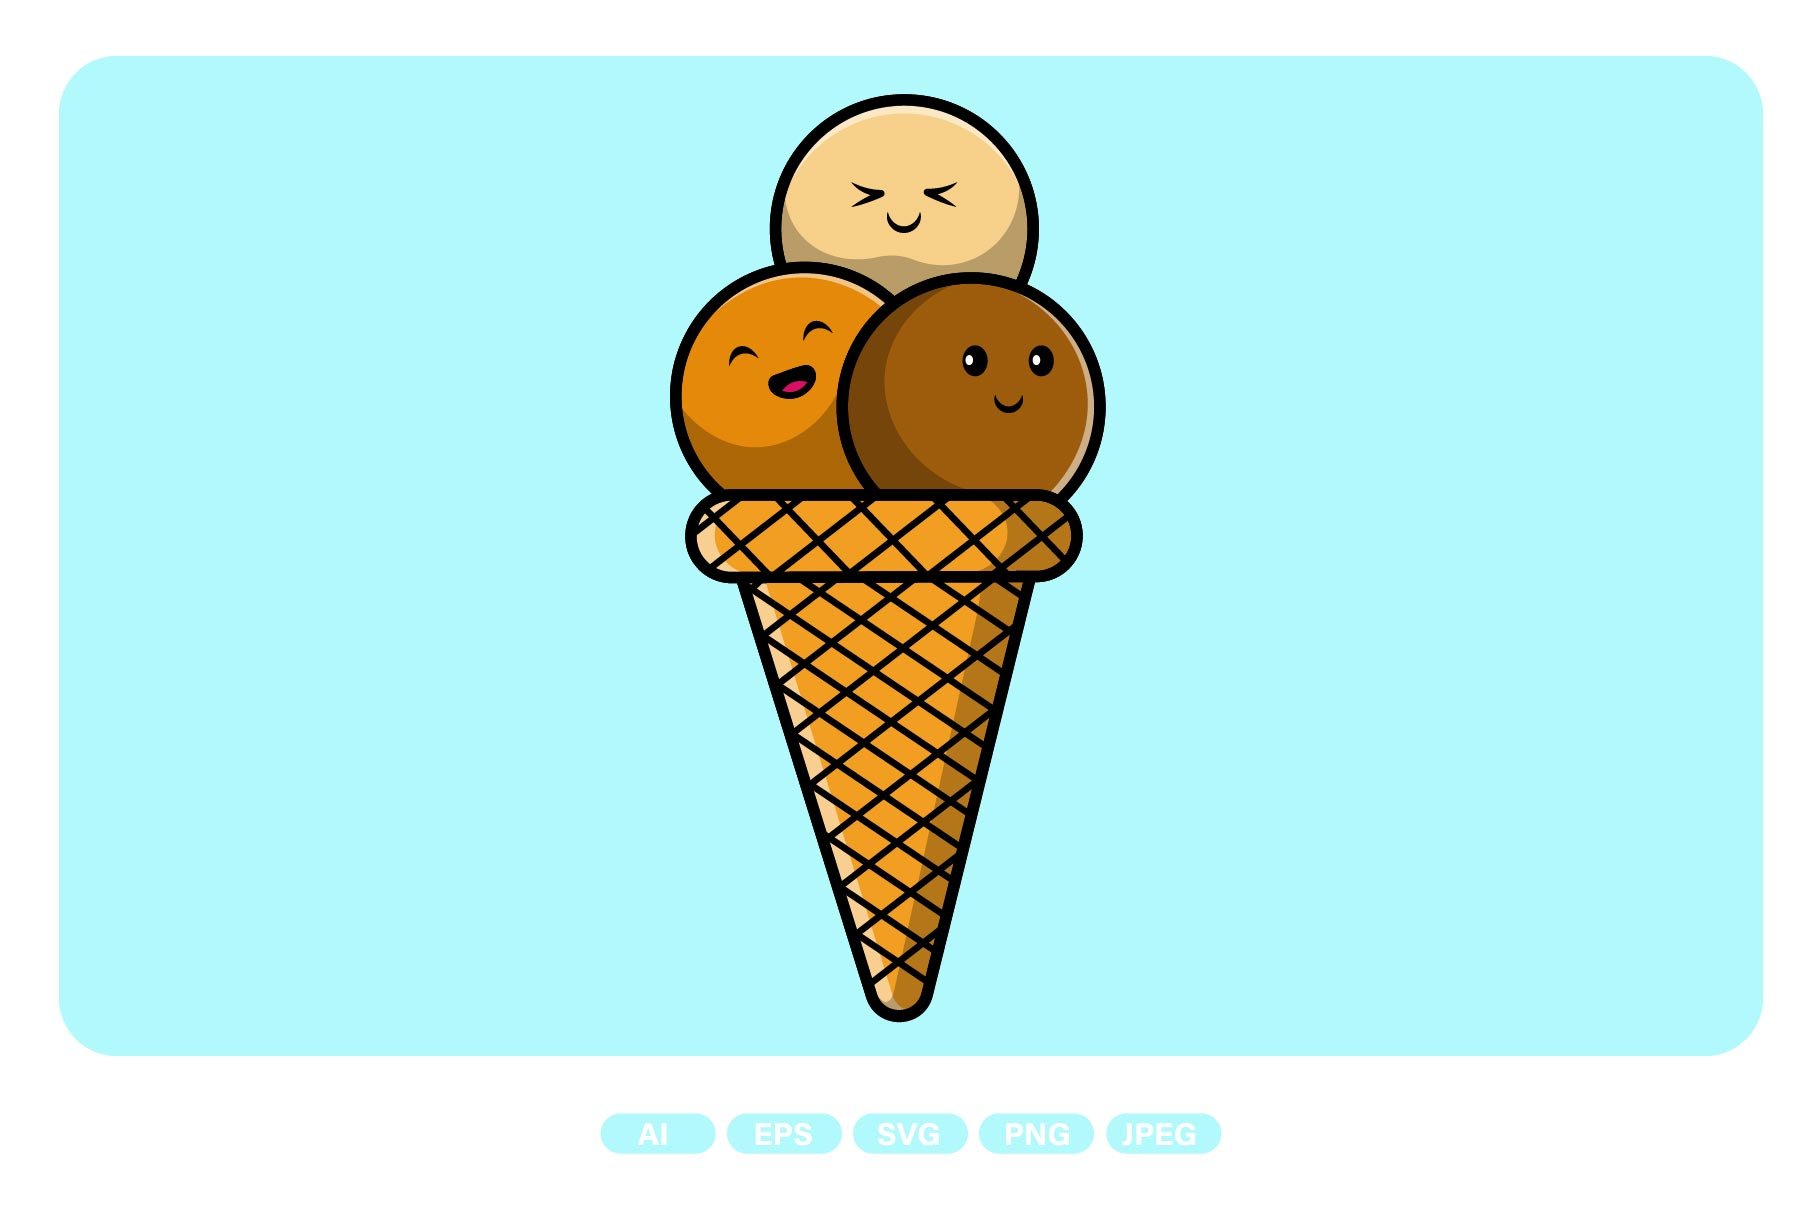 Cute Ice Cream cover image.